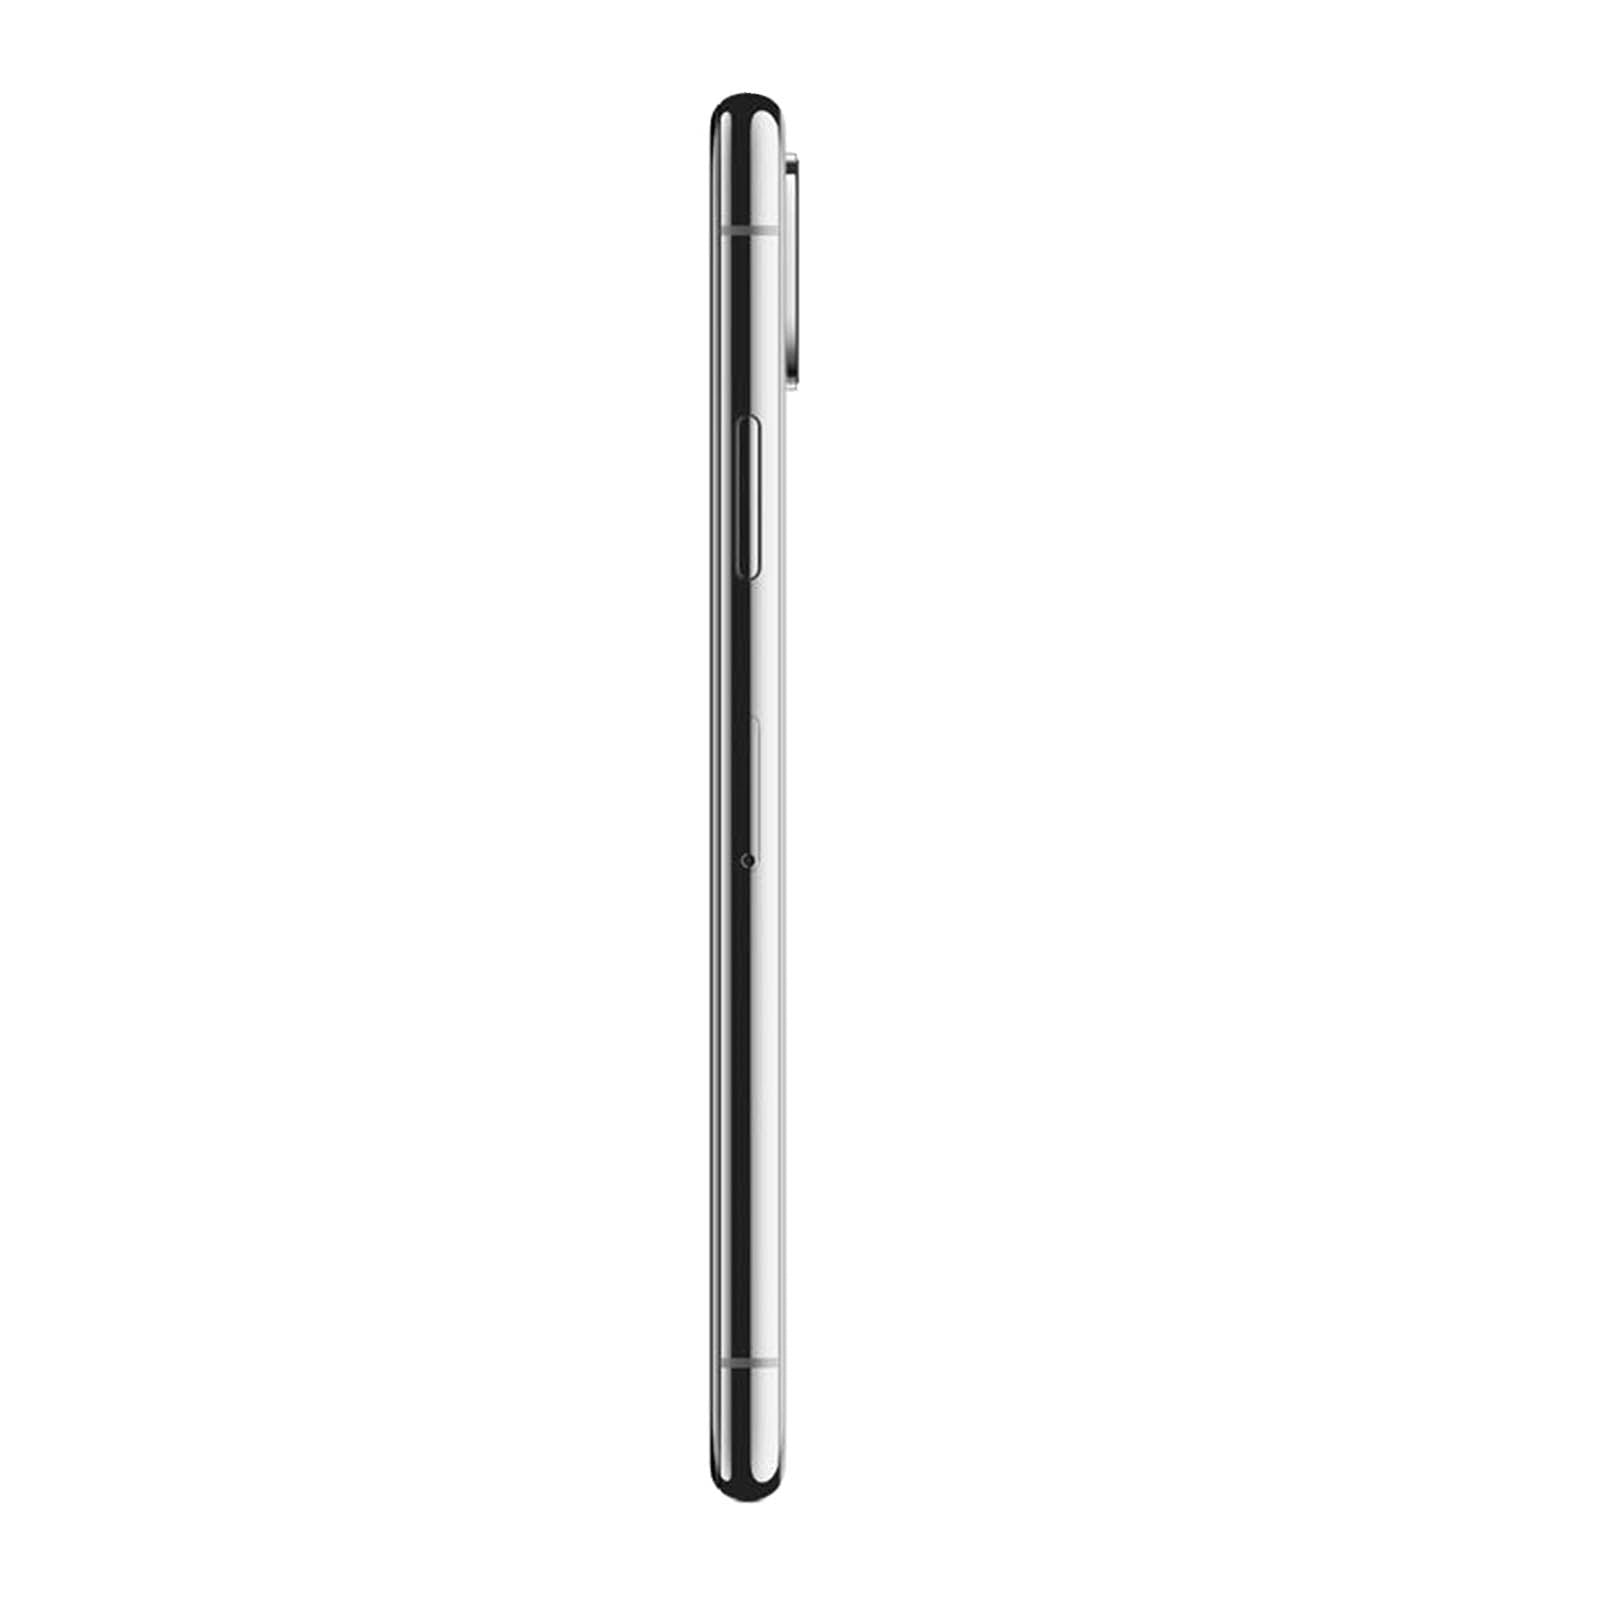 Apple iPhone XS Max 512GB Space Grey Good - Verizon